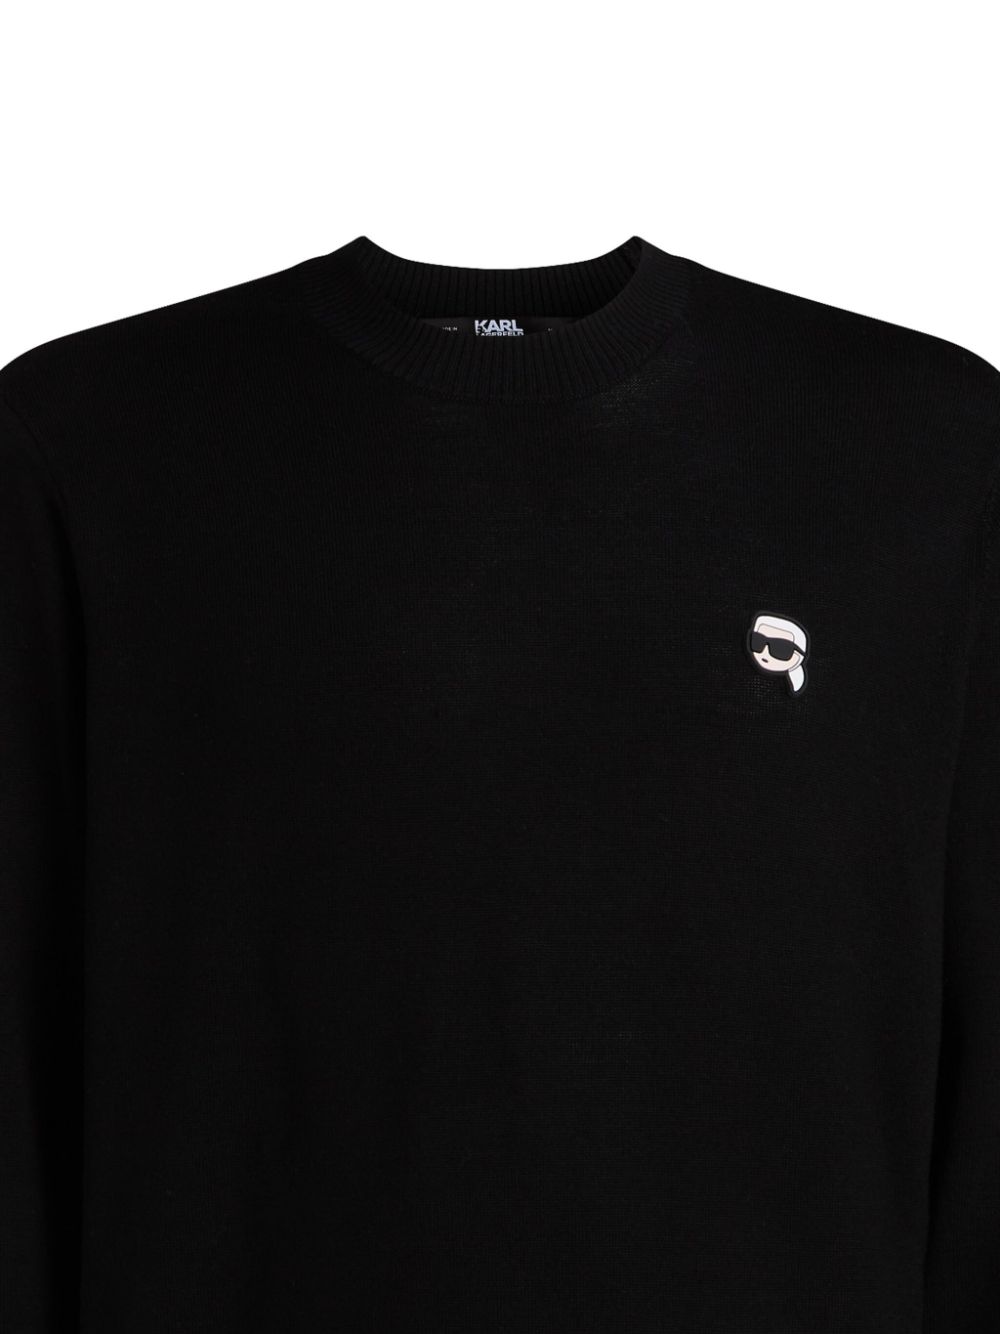 Karl Lagerfeld Ikonik trui van merinowol - Zwart